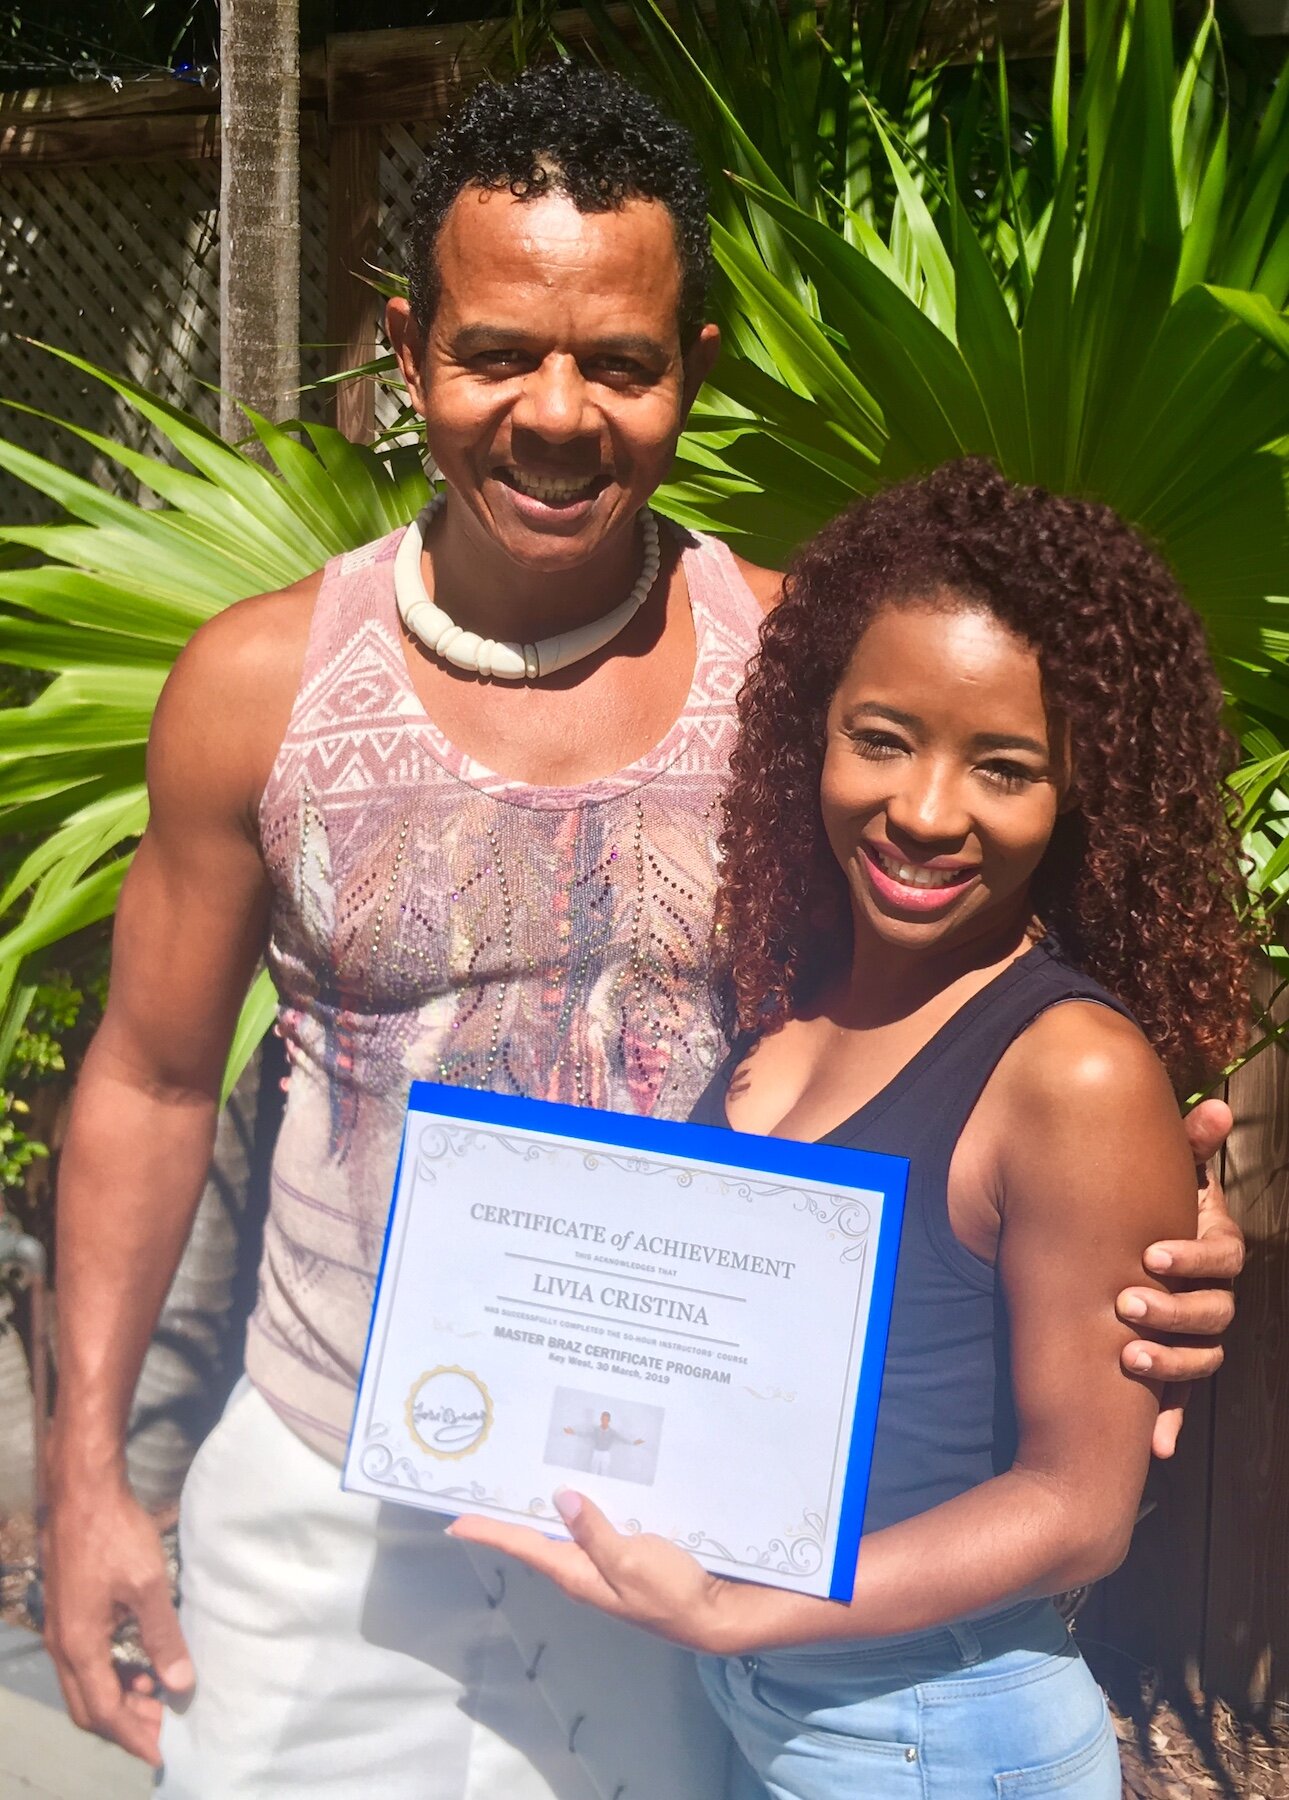 Label Livia Cristina Receives Master Braz Certificate 2019